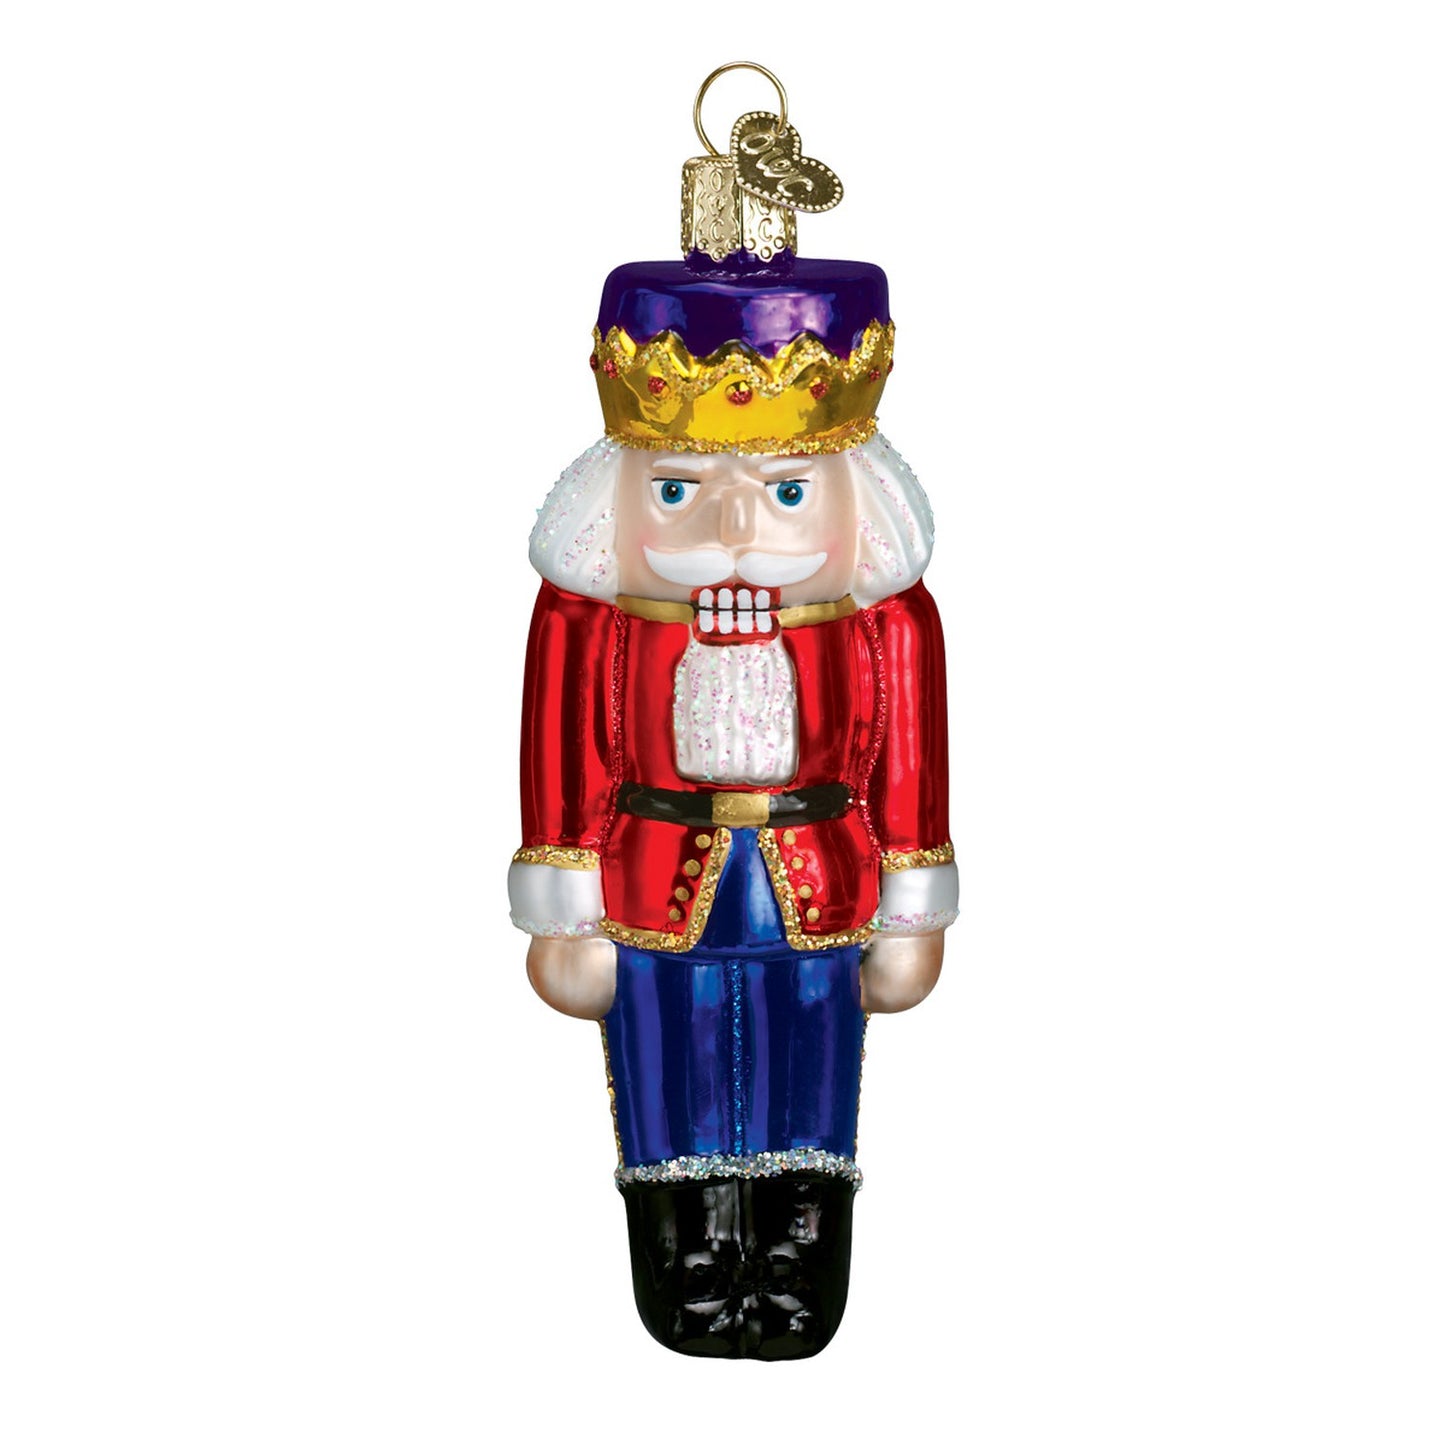 Old World Christmas Nutcracker Prince Ornament